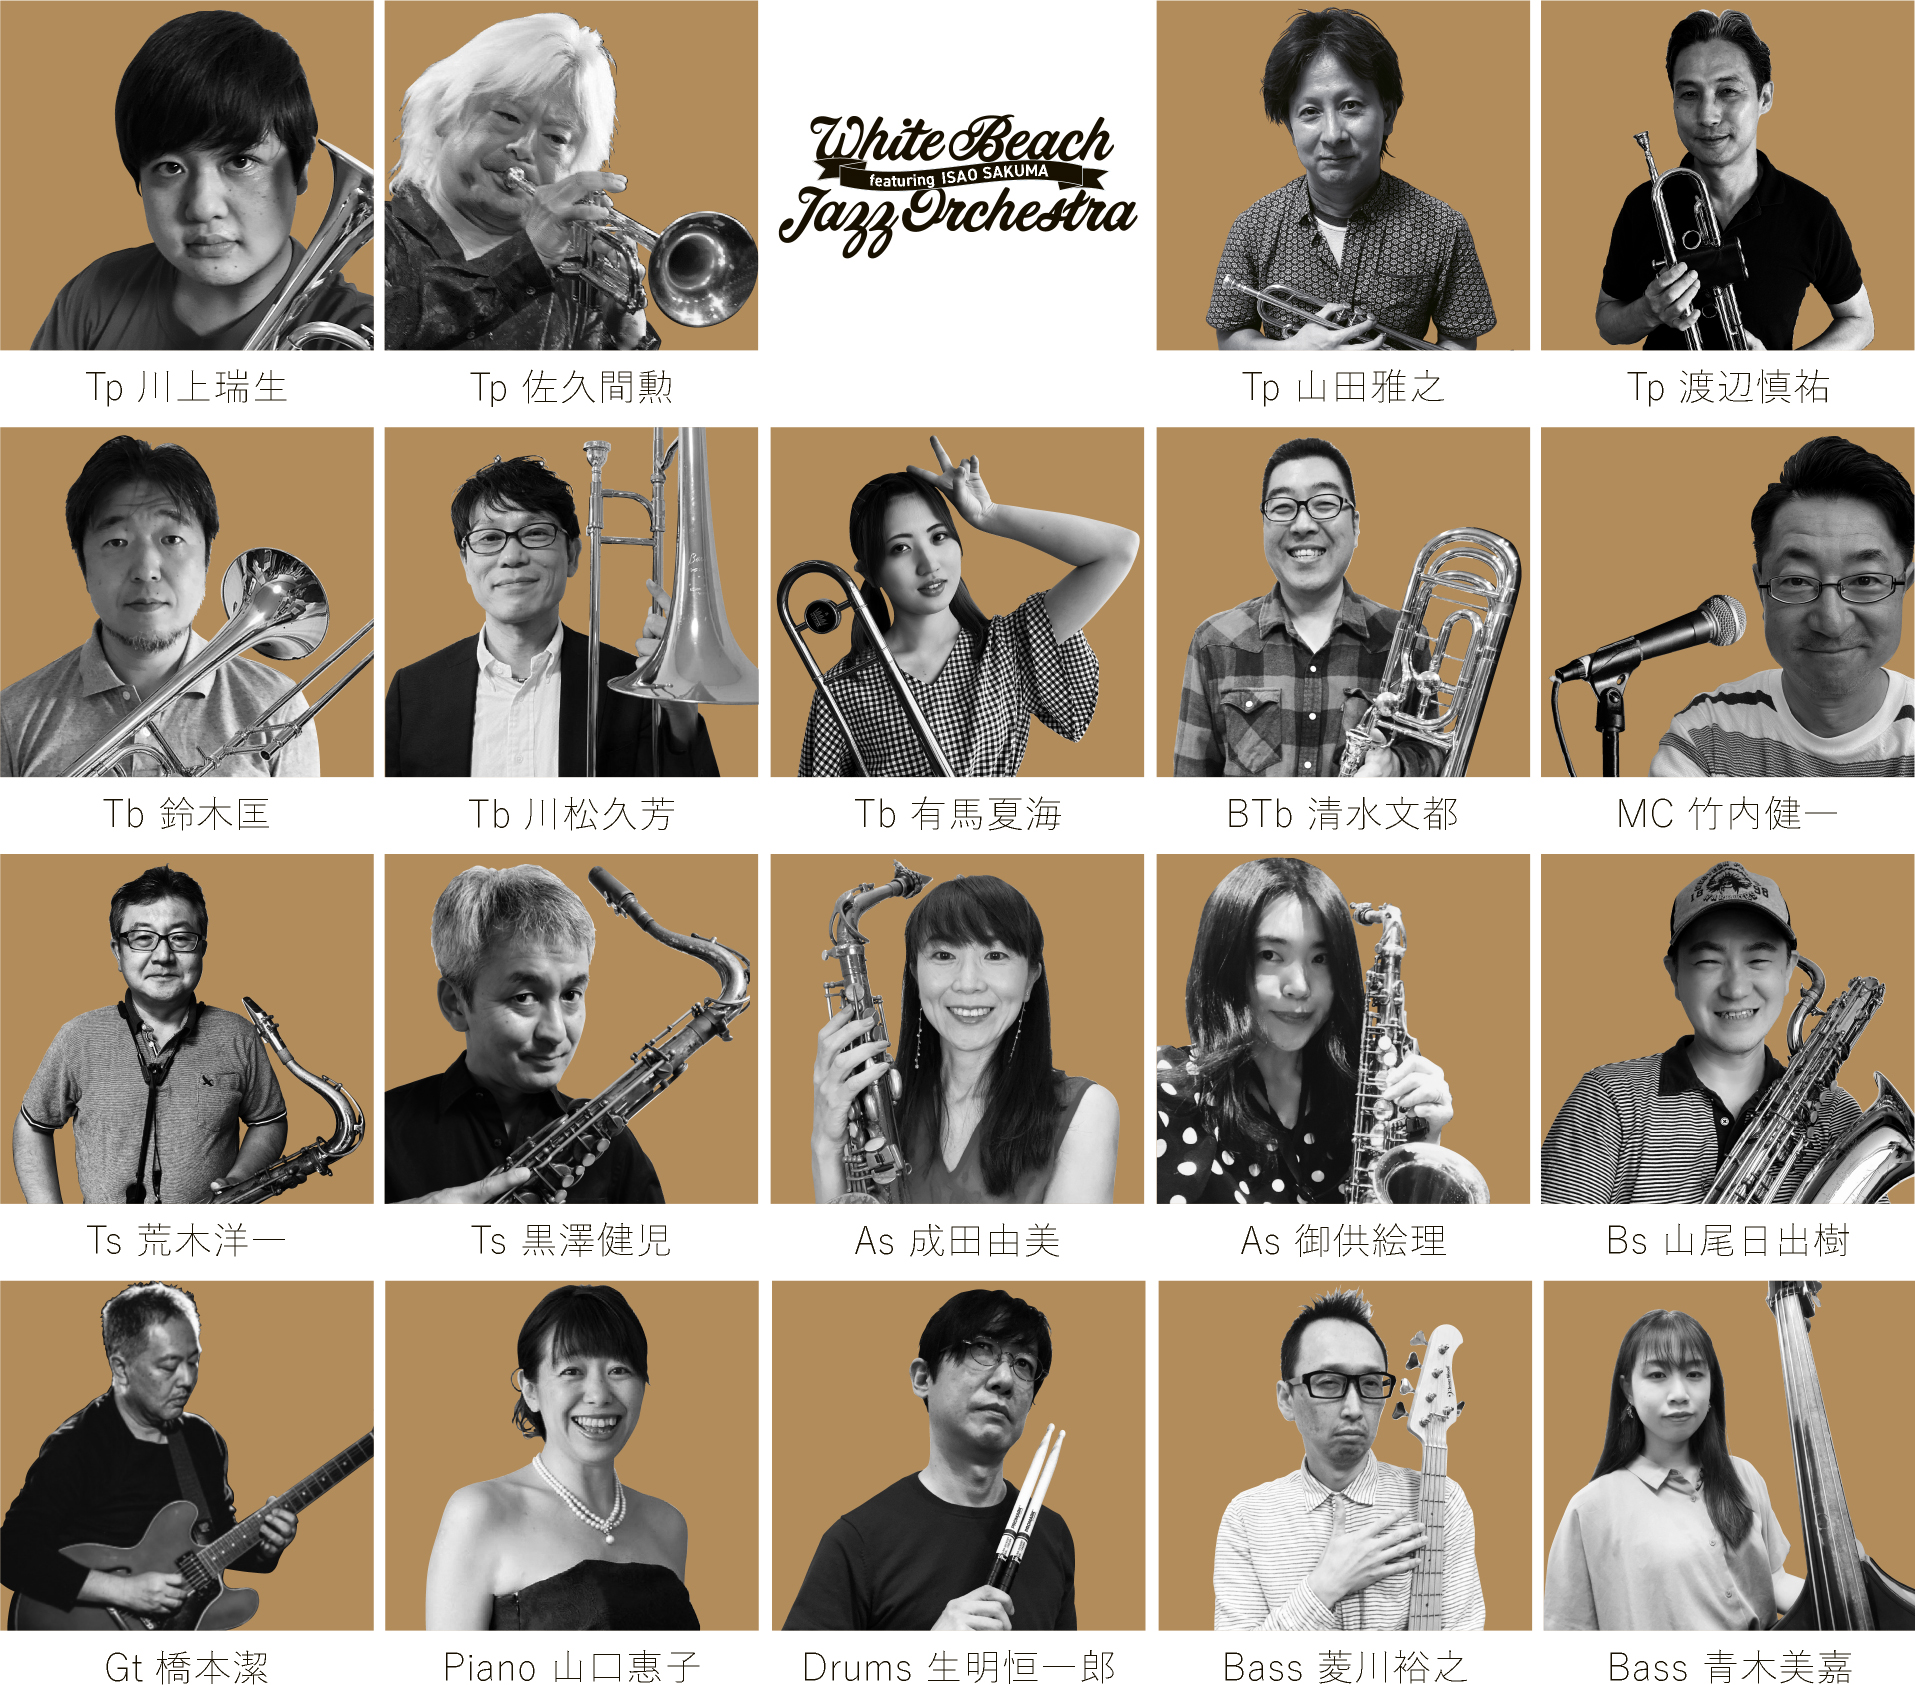 White Beach Jazz Orchestra featuring 佐久間勲